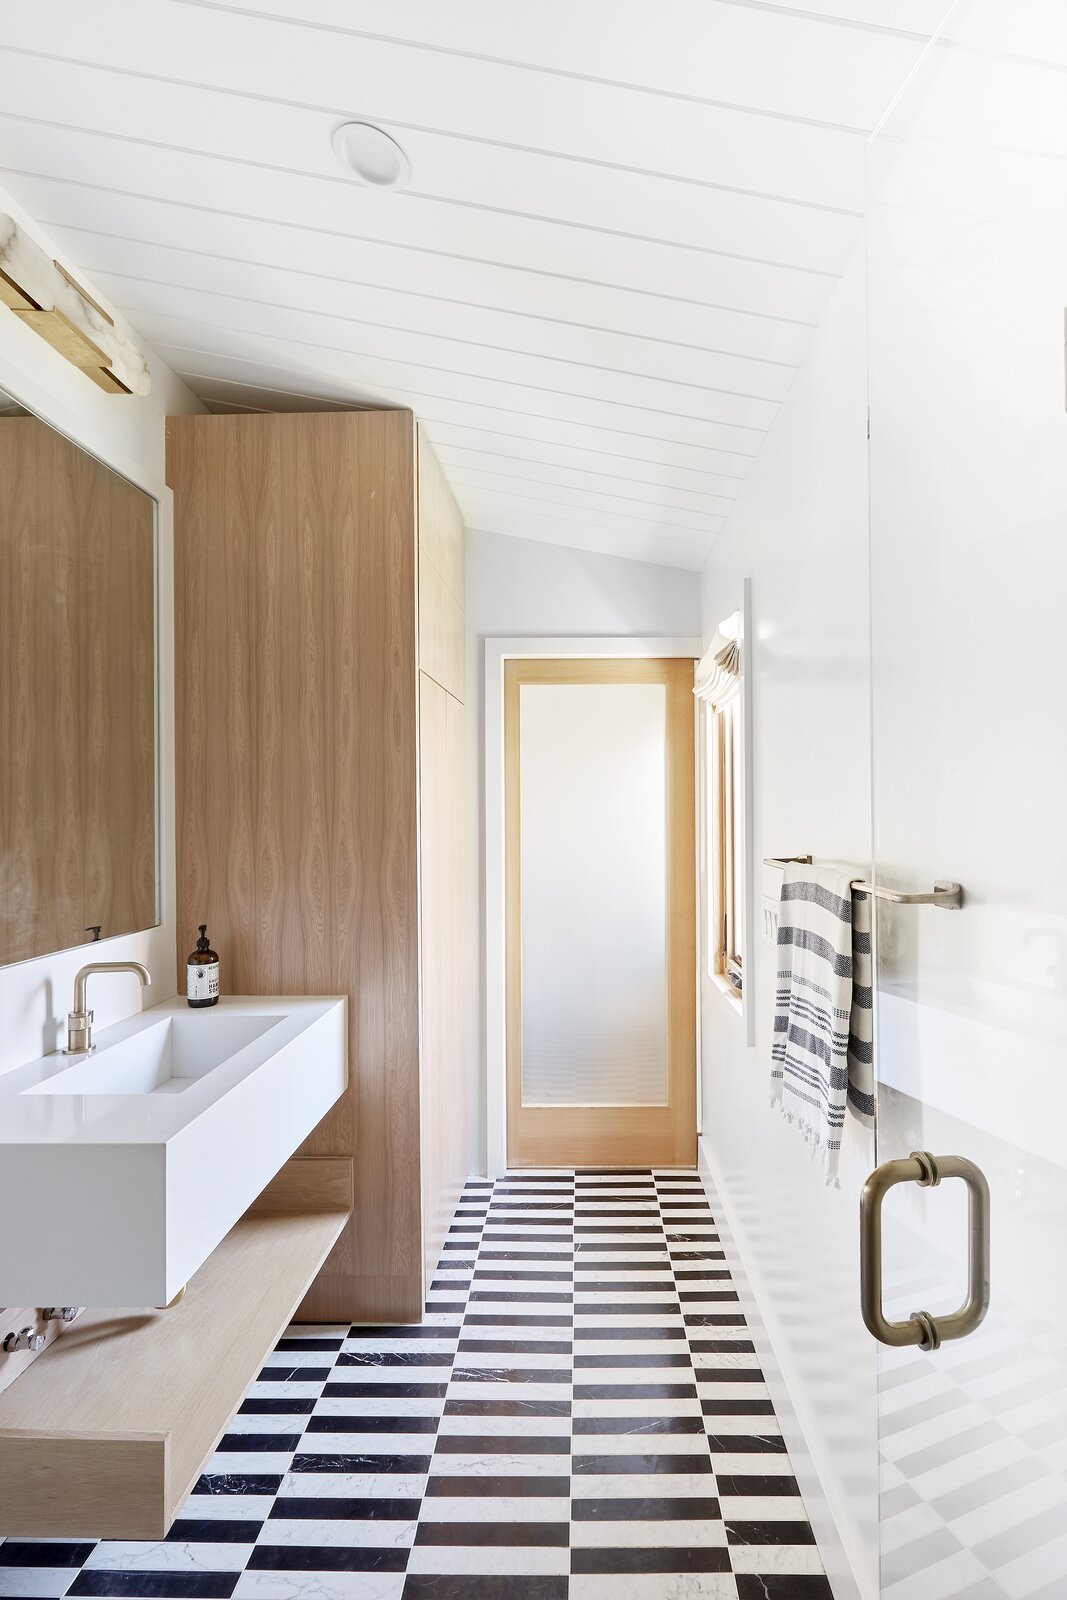 the-bathroom-features-custom-black-and-white-carrara-marble-flooring.jpg